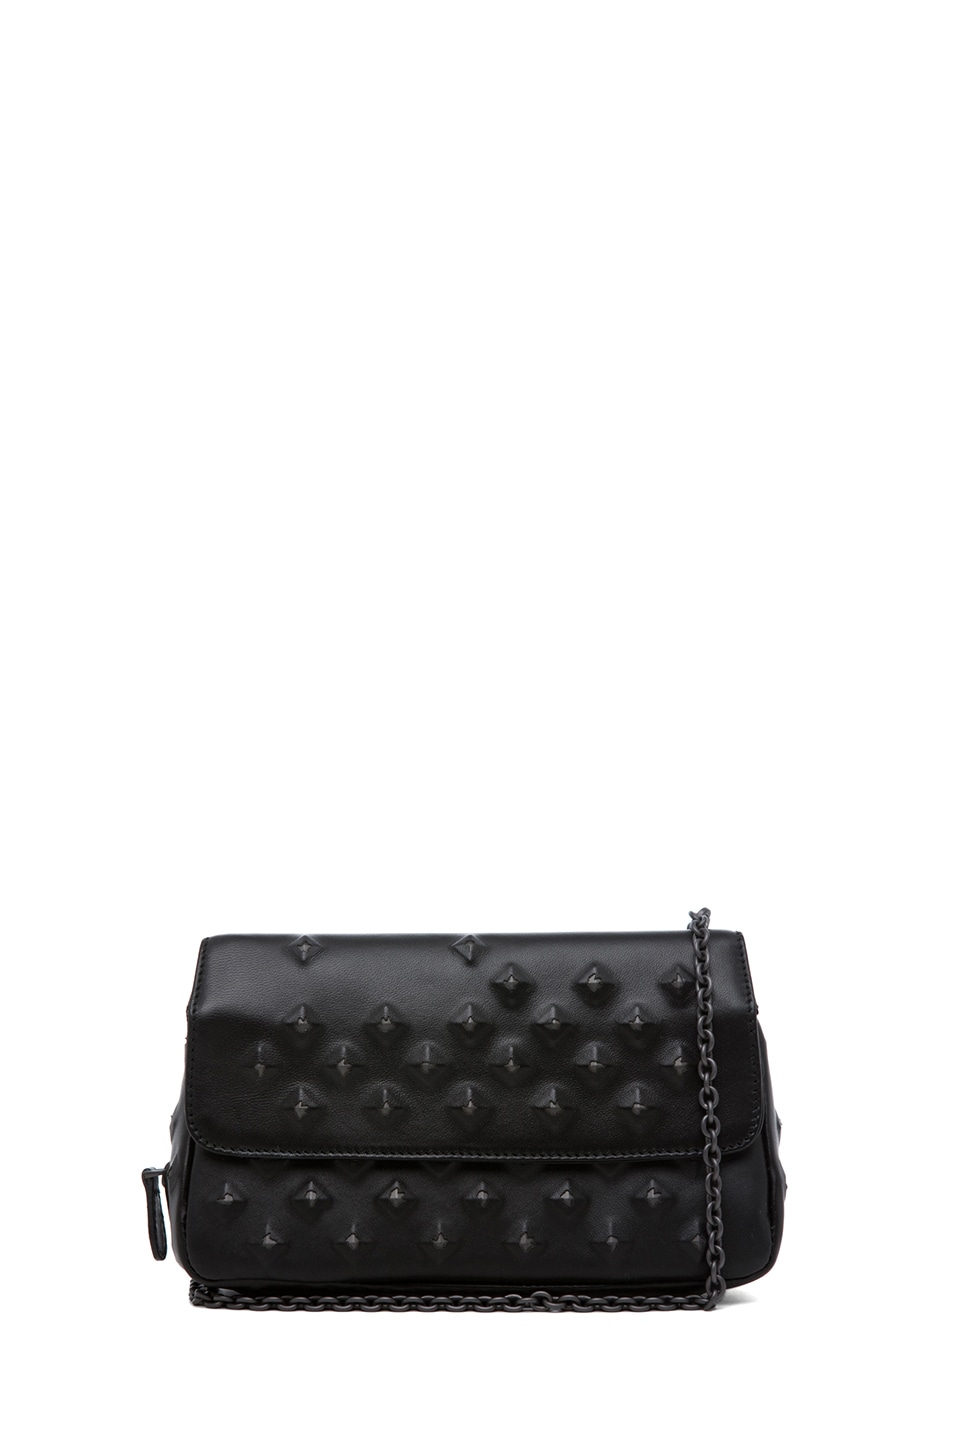 Bottega Veneta Nappa Stud Messenger Bag in Black | FWRD